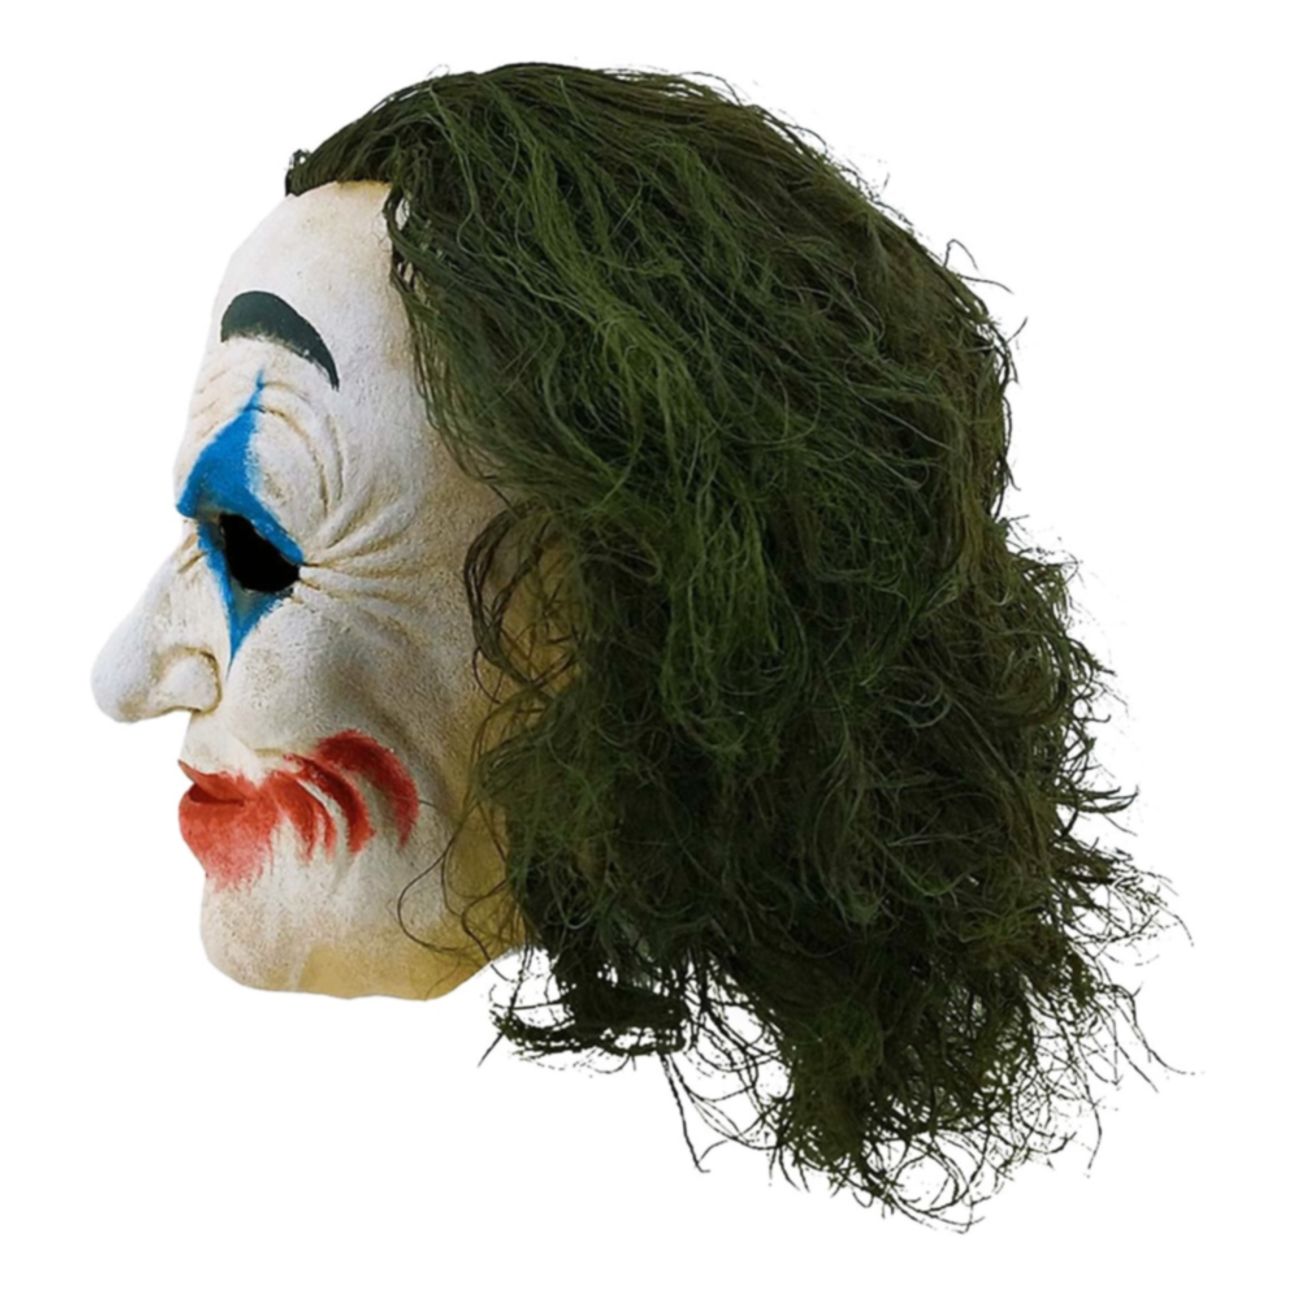 ghoulish-crazy-jack-clown-mask-97058-2